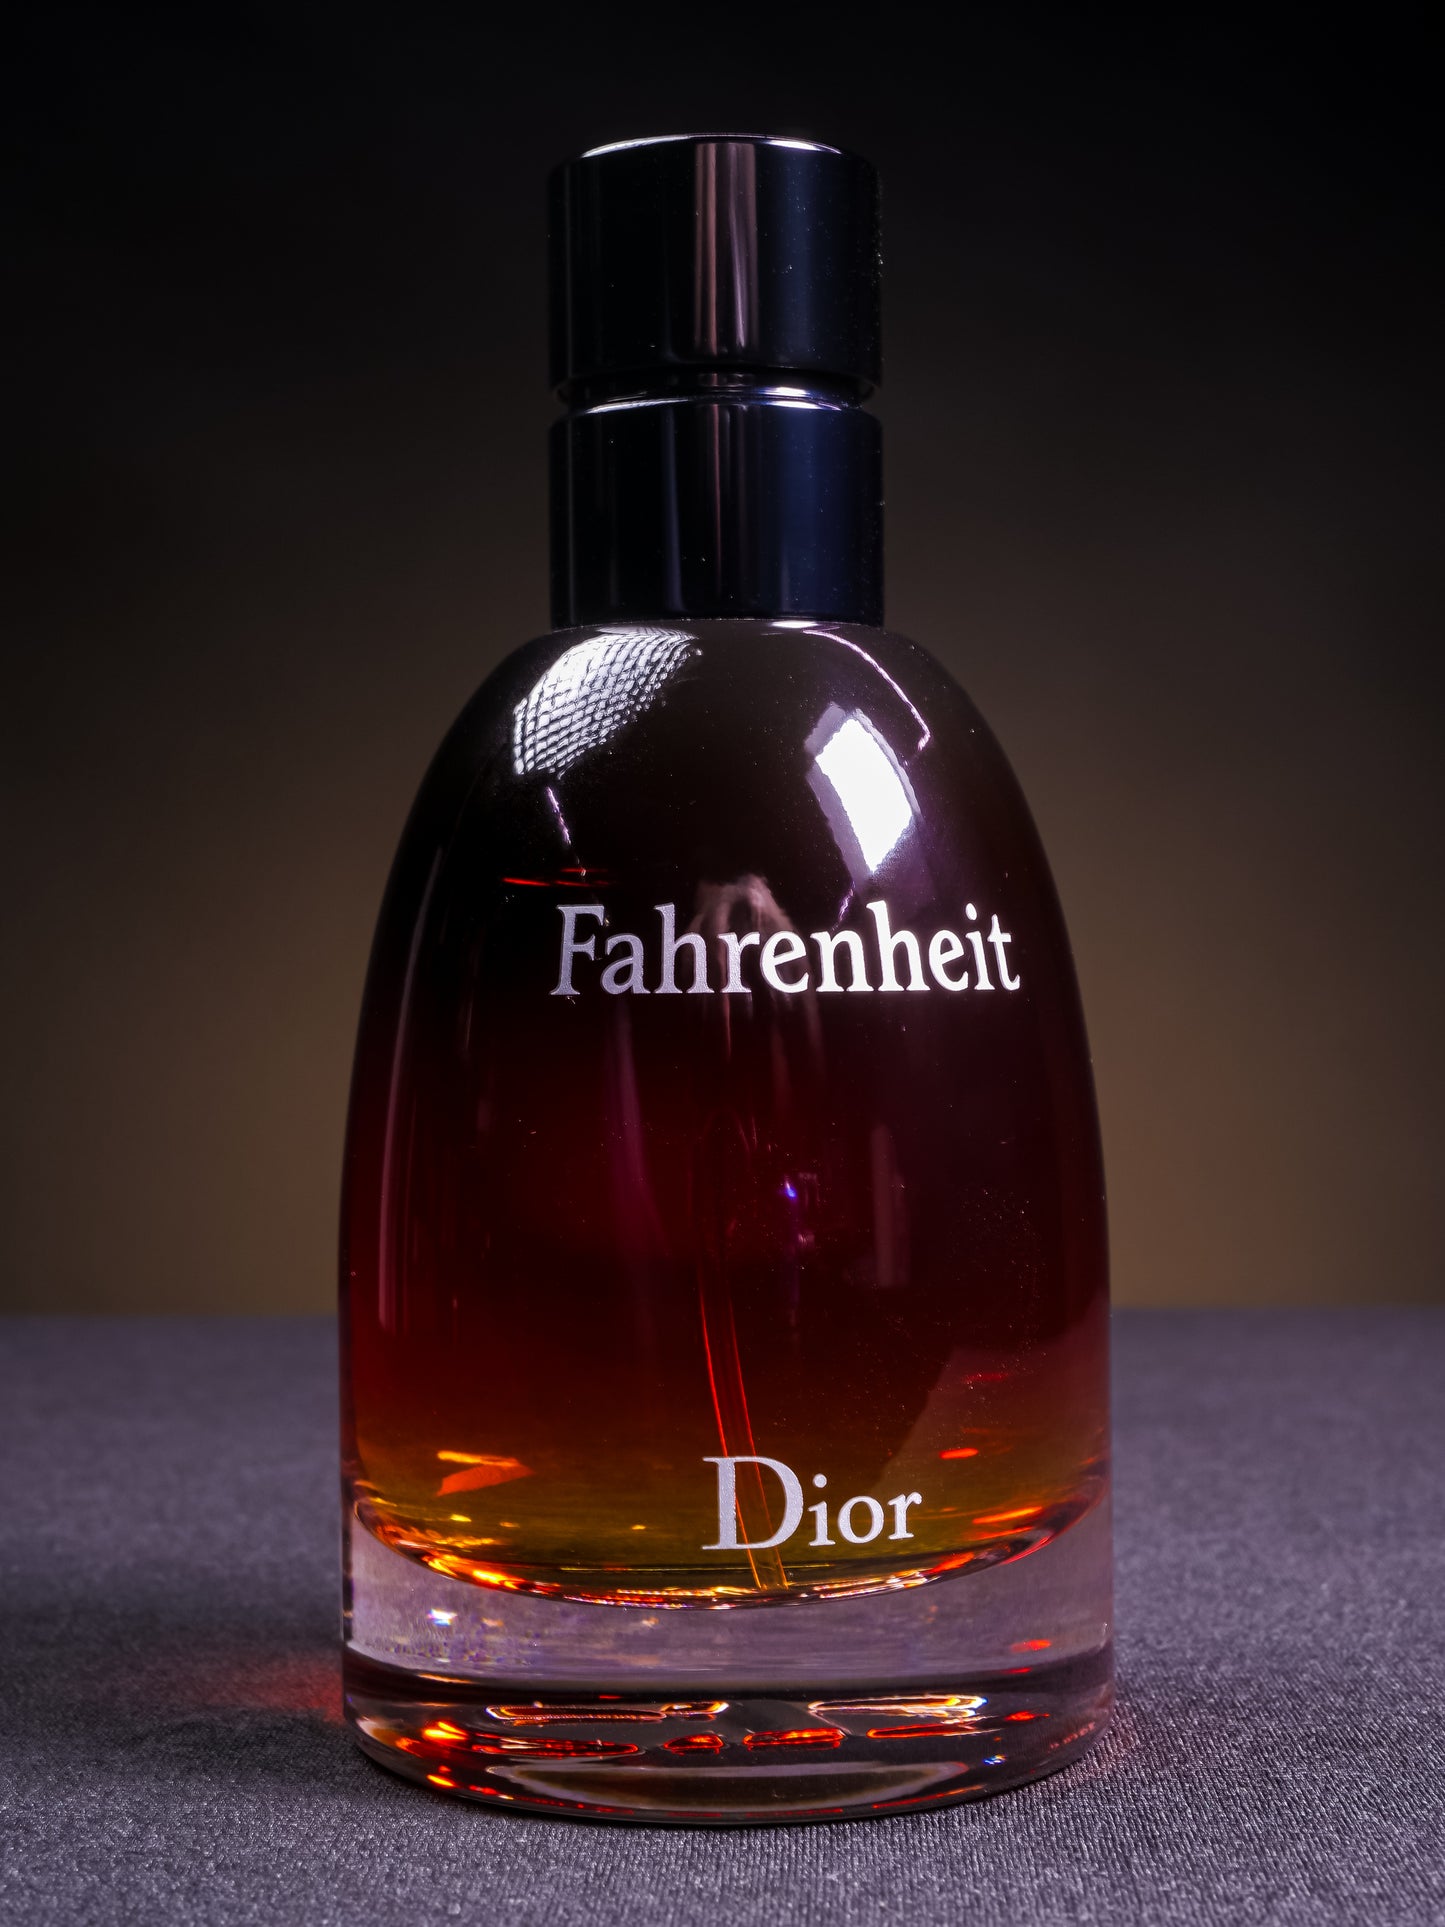 Dior "Fahrenheit" Le Parfum Sample Only NOT Full Bottle